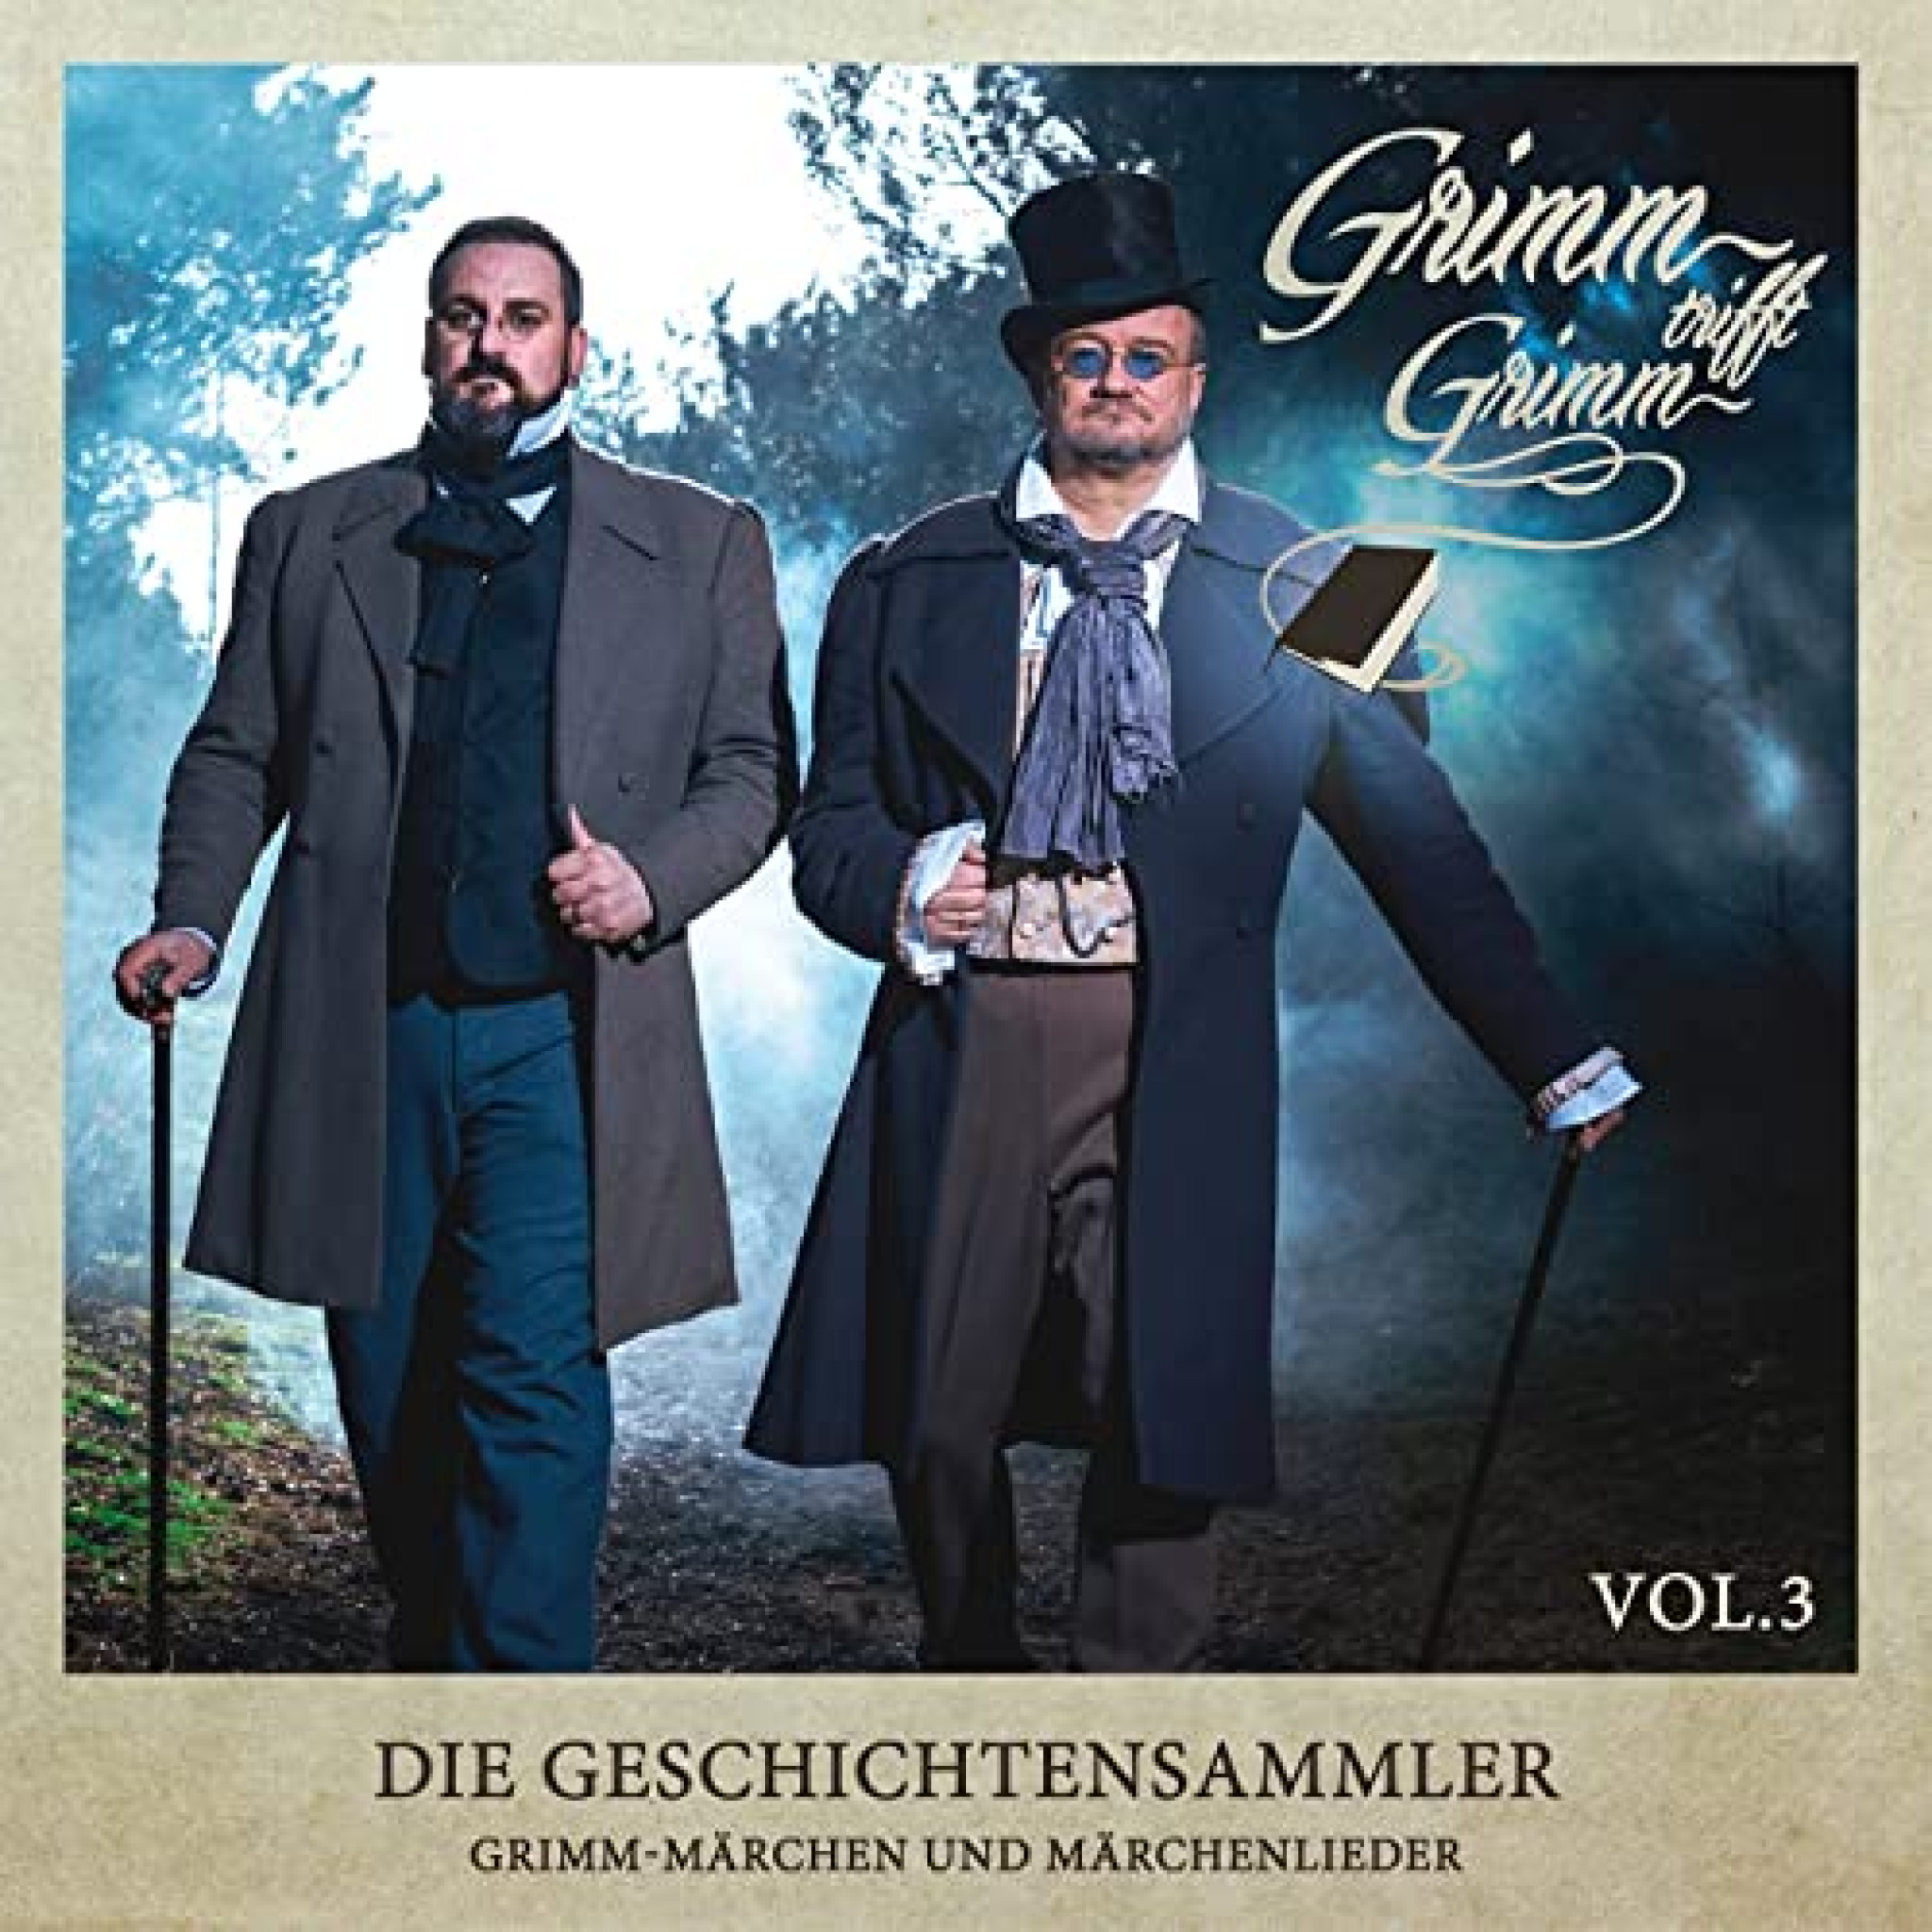 Grimm trifft Grimm Vol. 3 Geschichtensammler